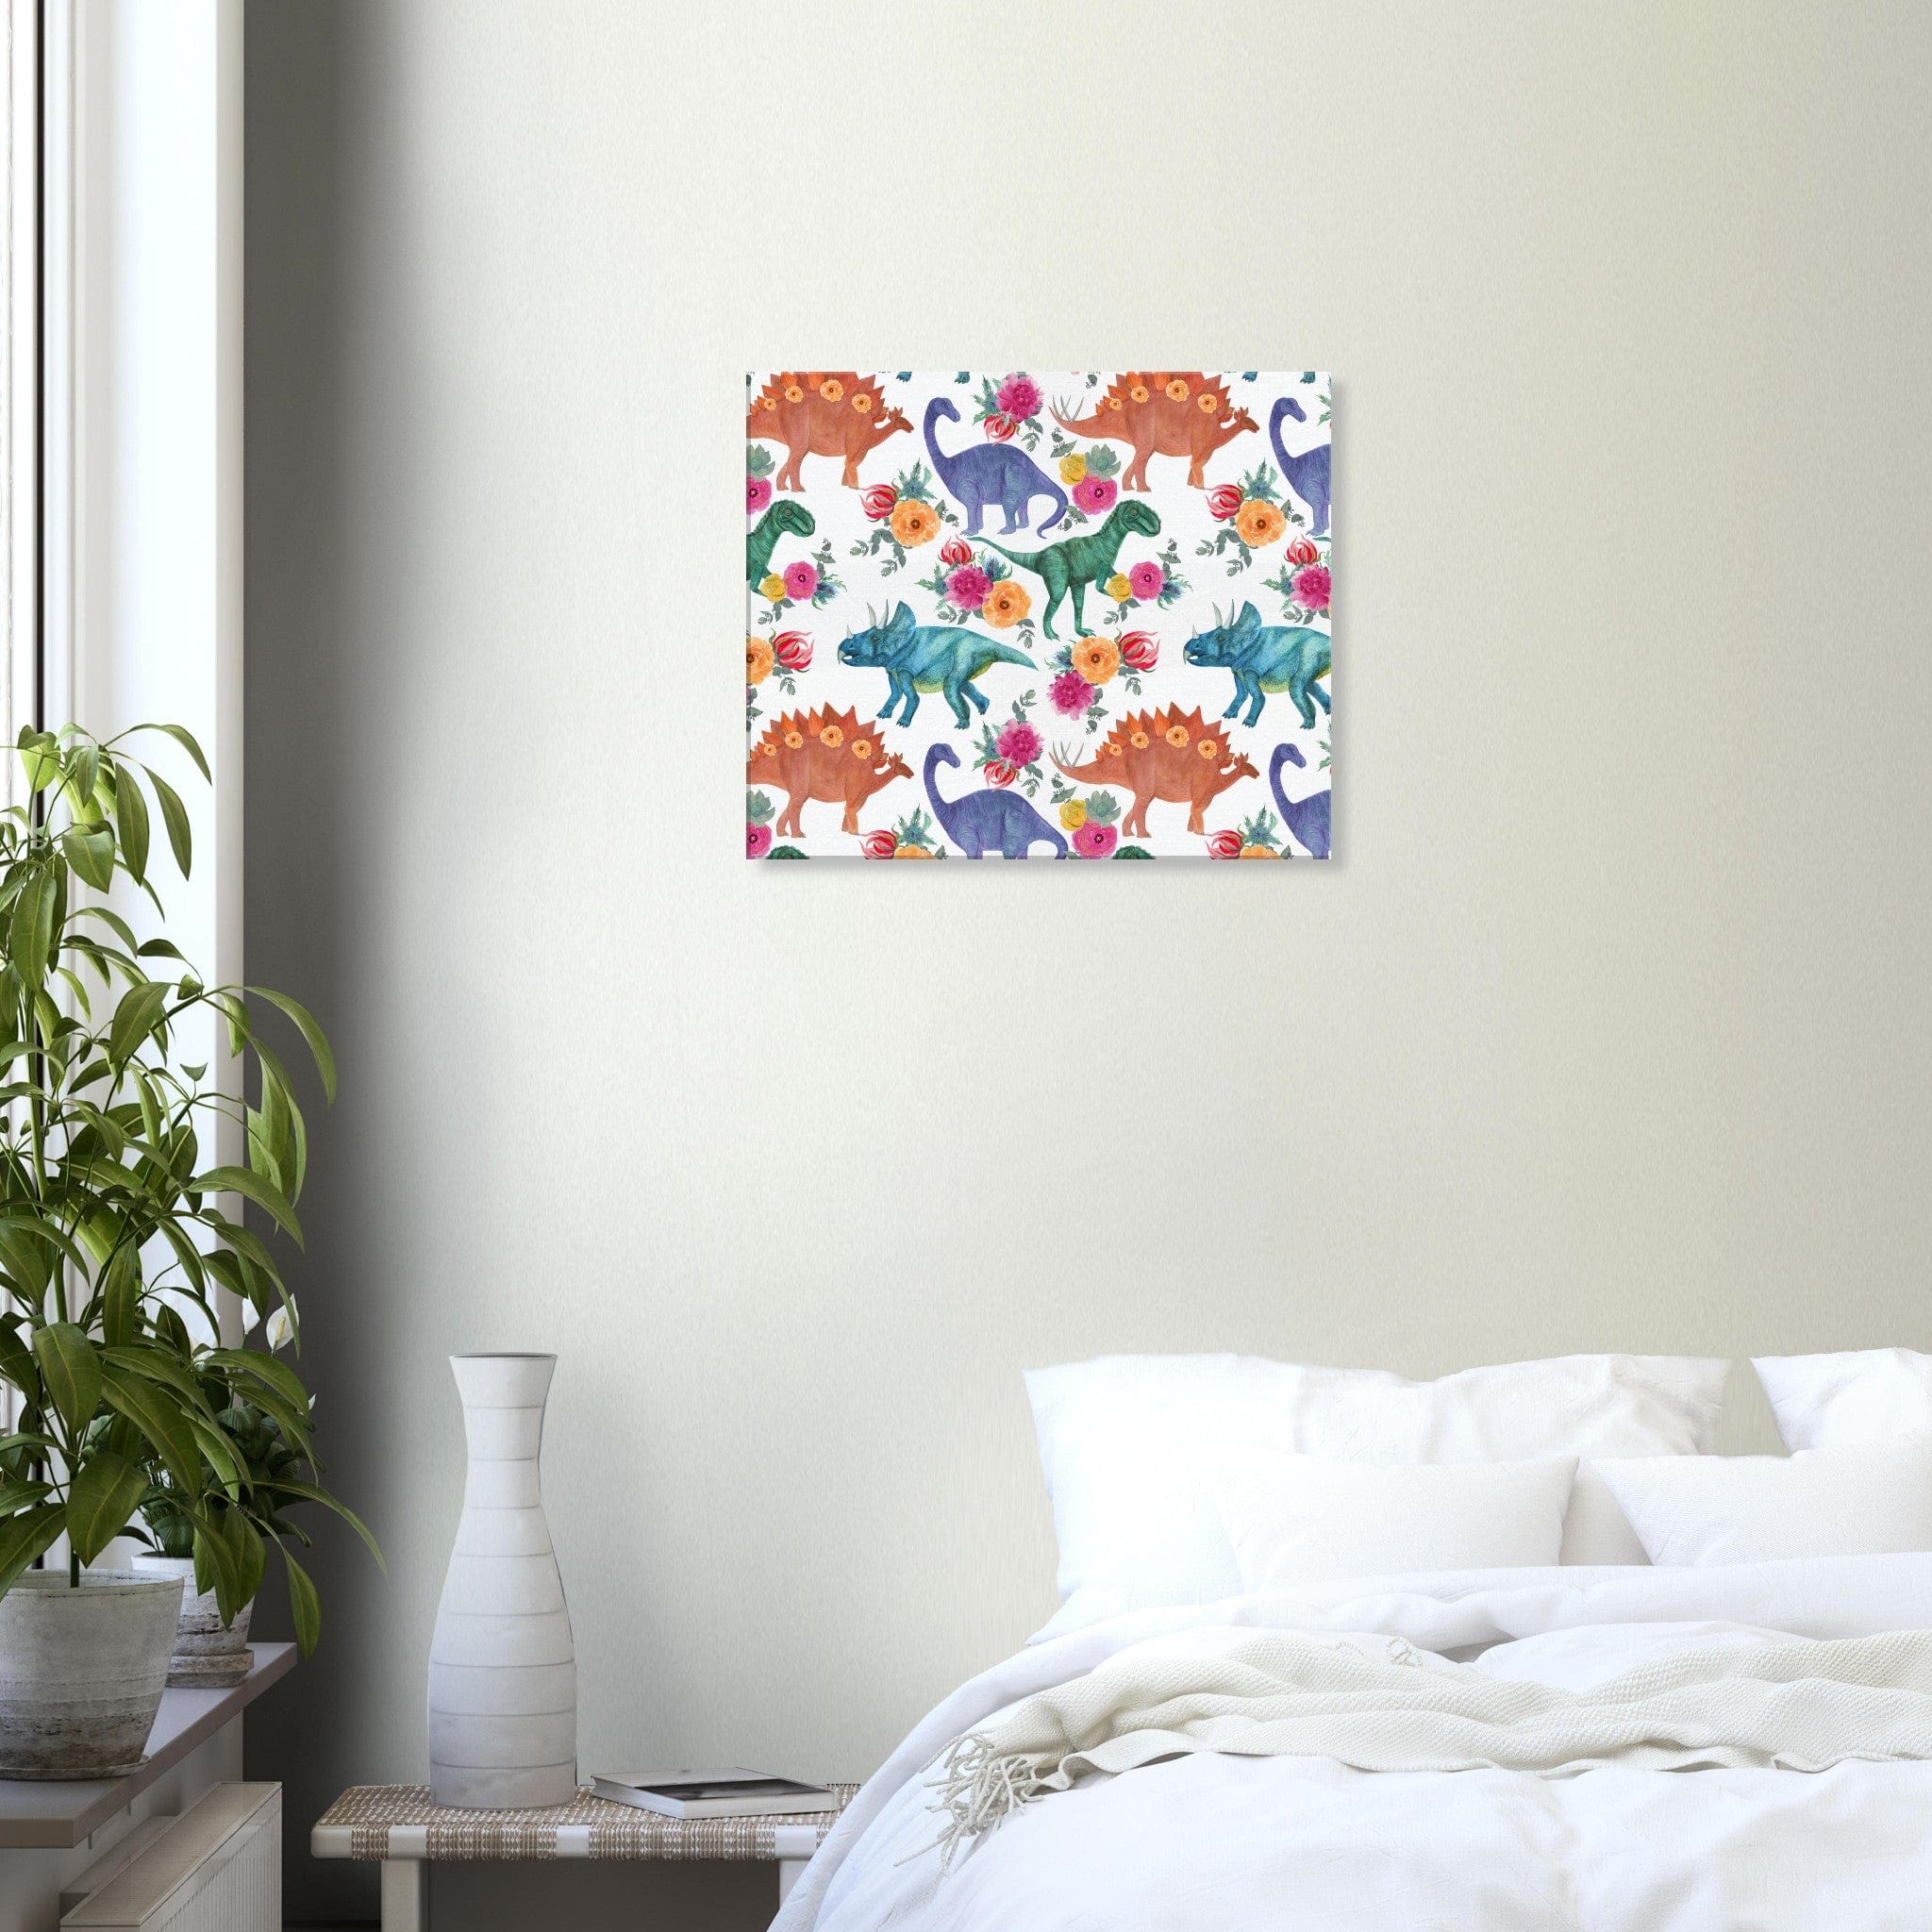 Little Squiffy Print Material 50x60 cm / 20x24″ / Horizontal Floral Dinosaurs Canvas Wall Art